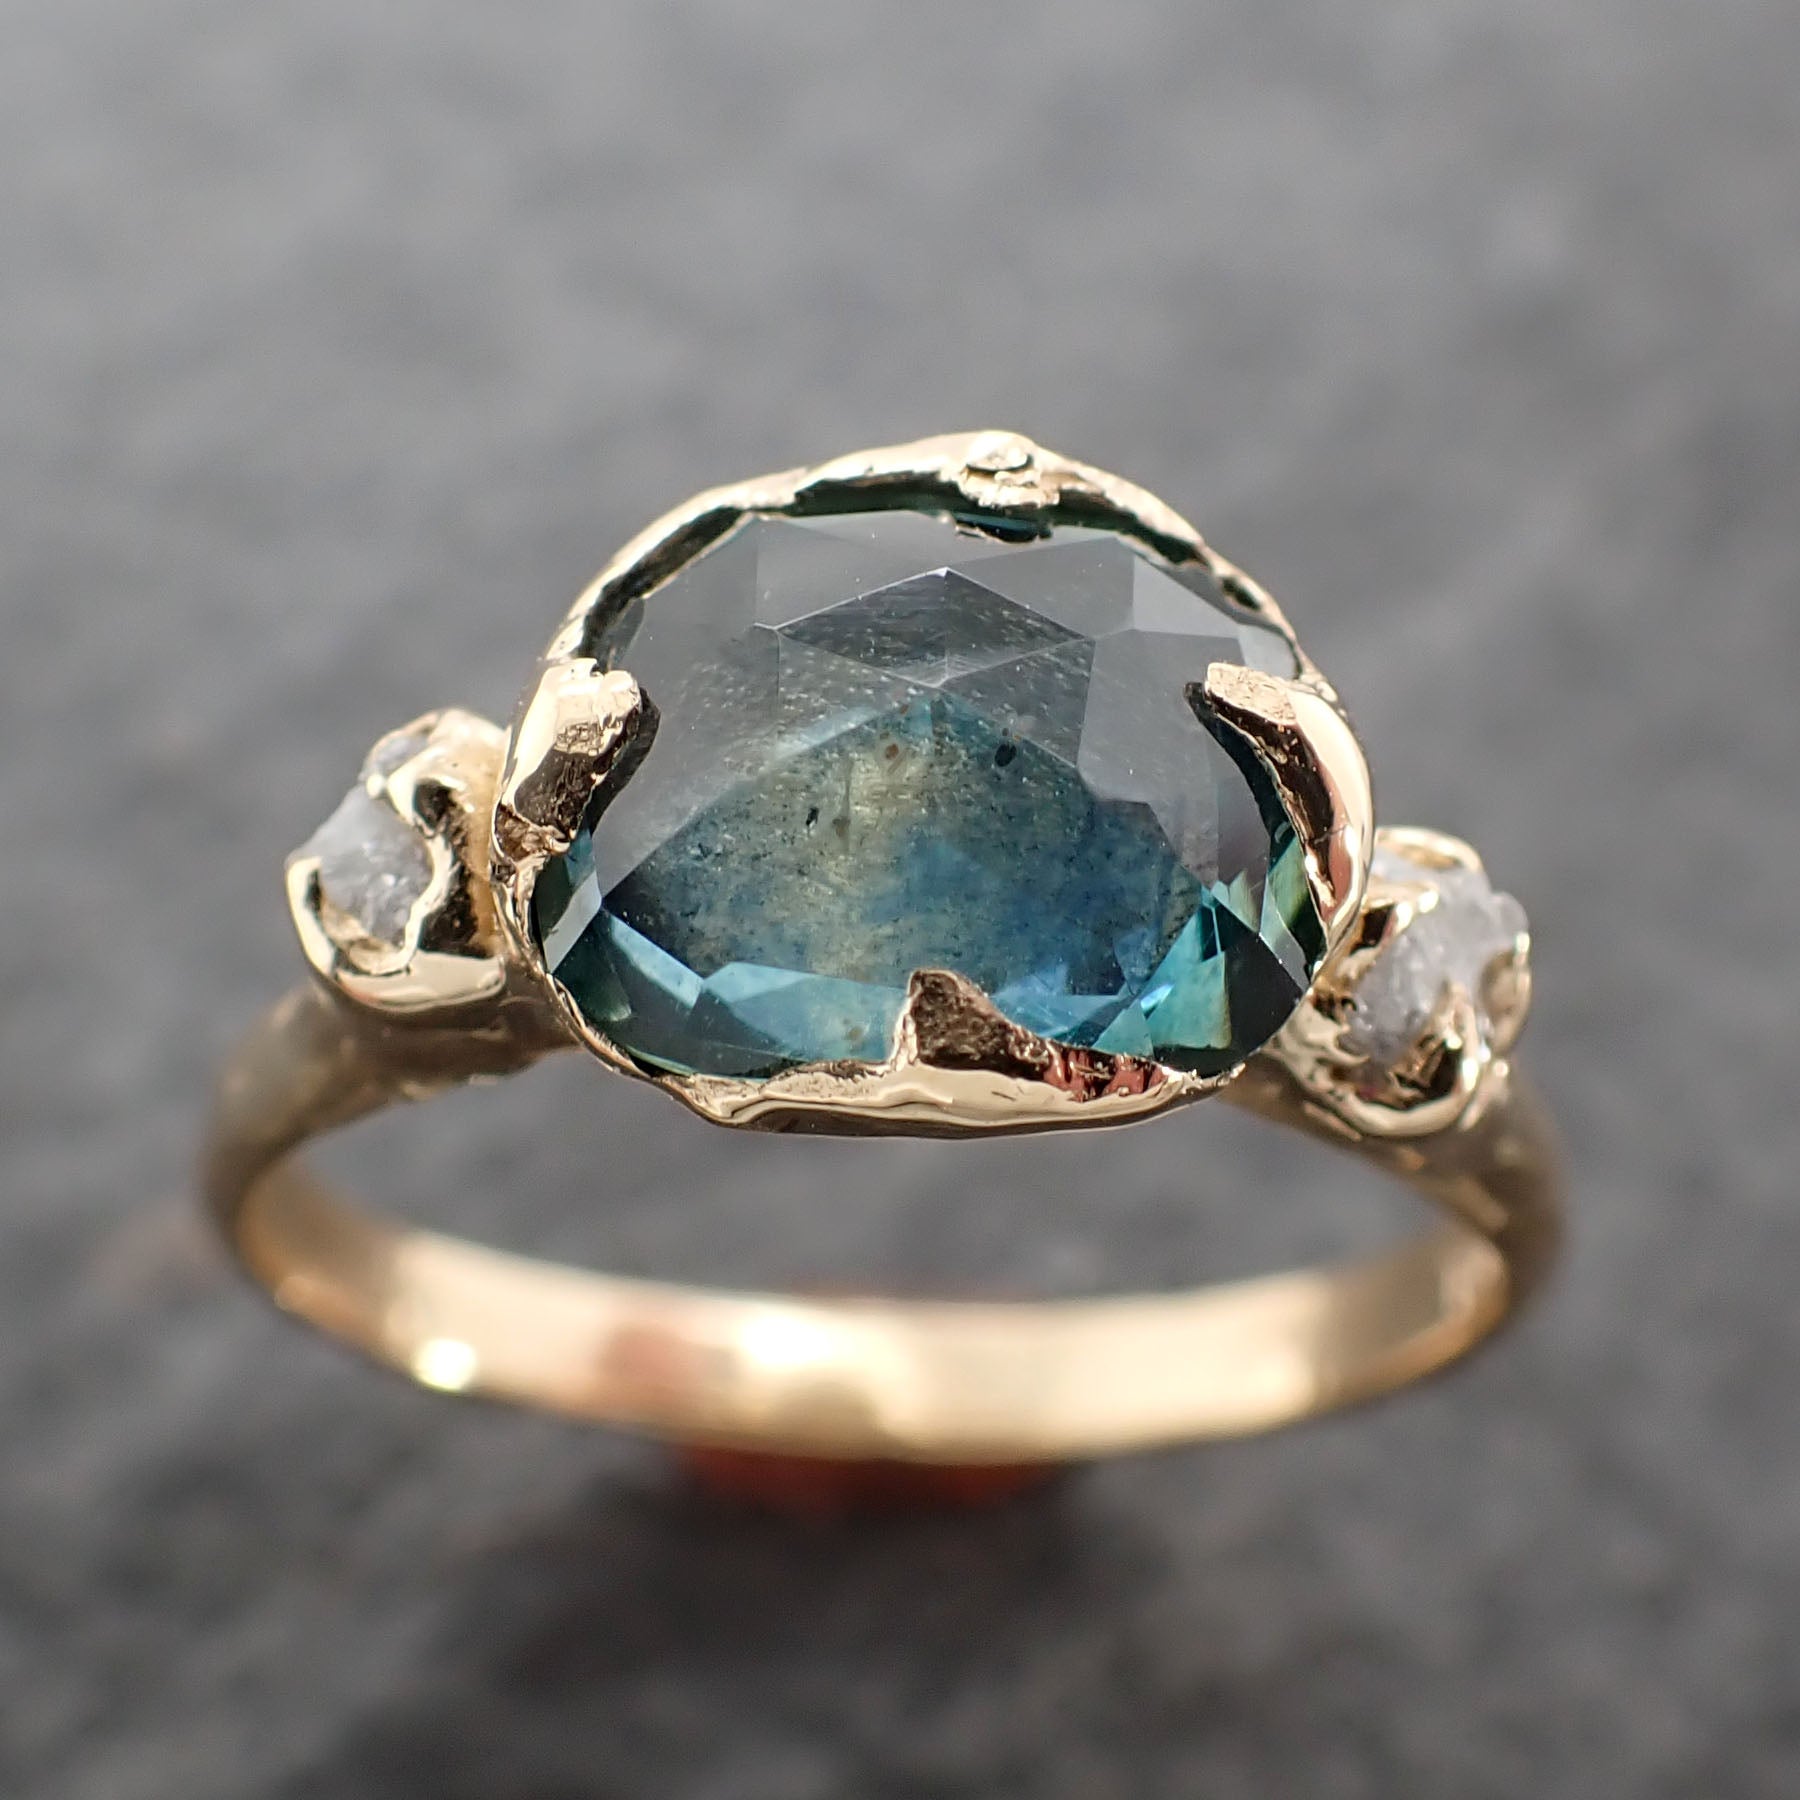 fancy cut montana blue sapphire rough diamond 18k yellow gold engagement ring wedding ring gemstone ring multi stone ring 2640 Alternative Engagement